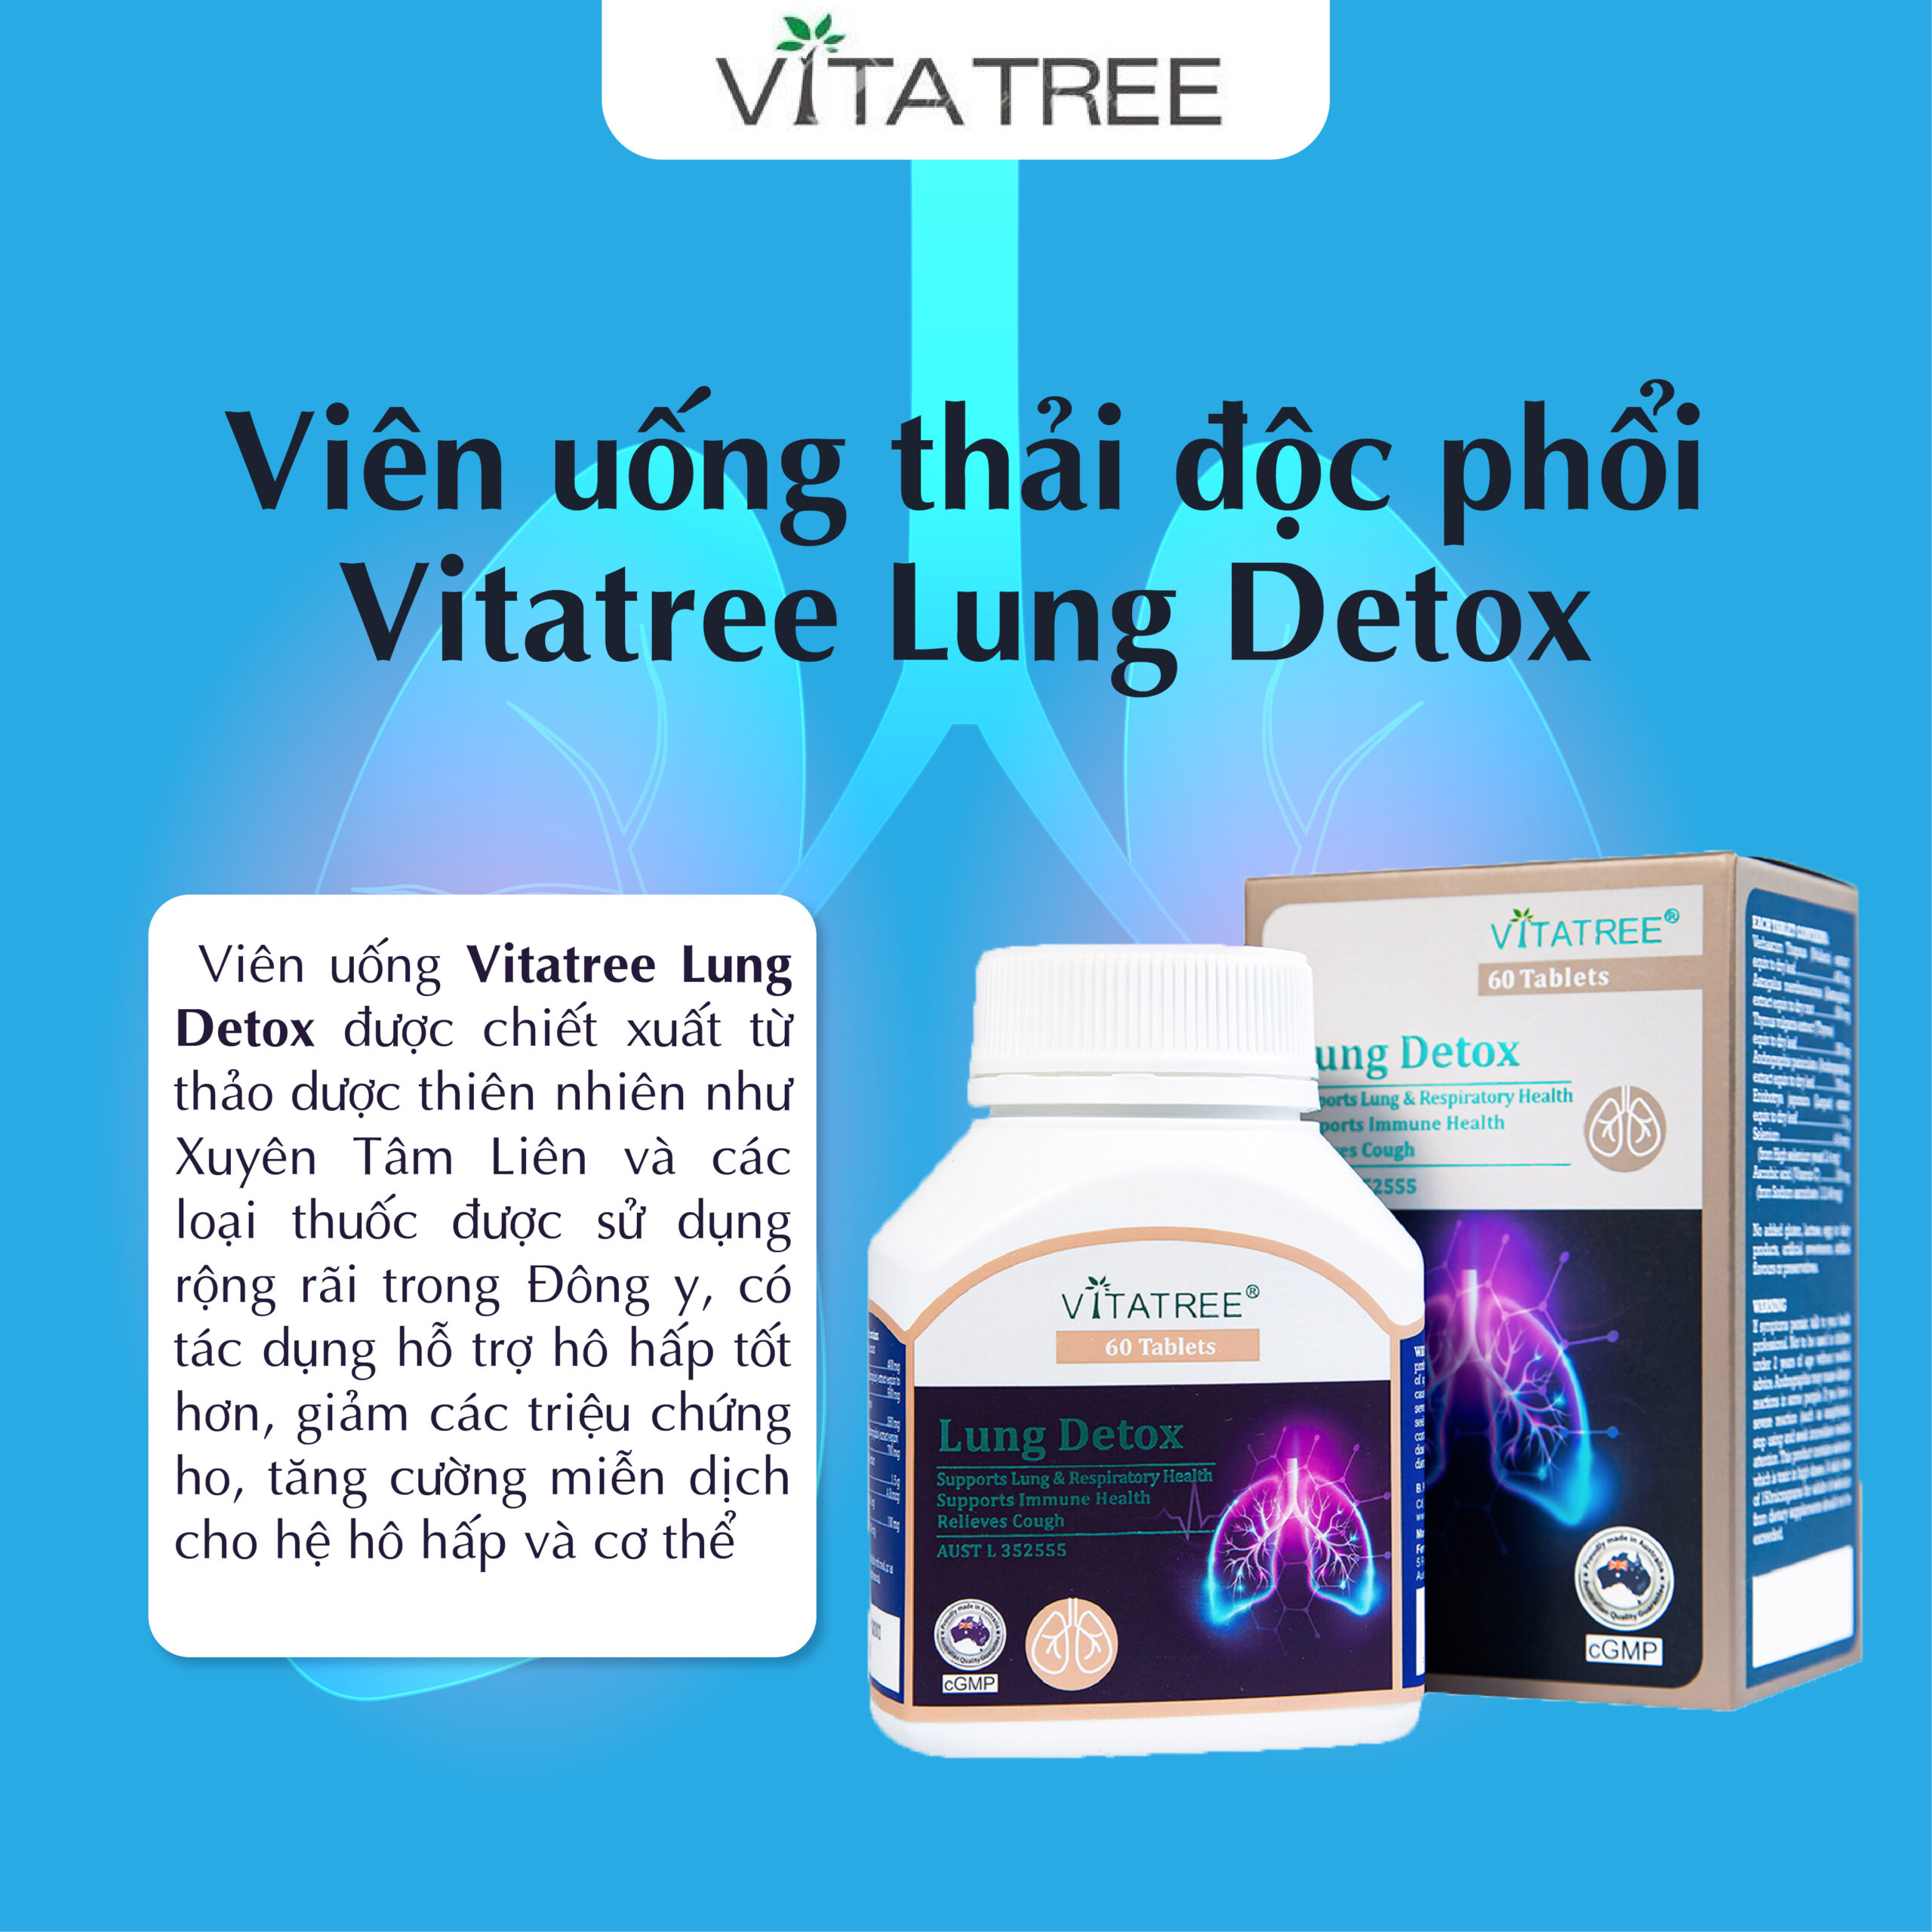 Thai doc phoi Vitatree Lung Detox scaled